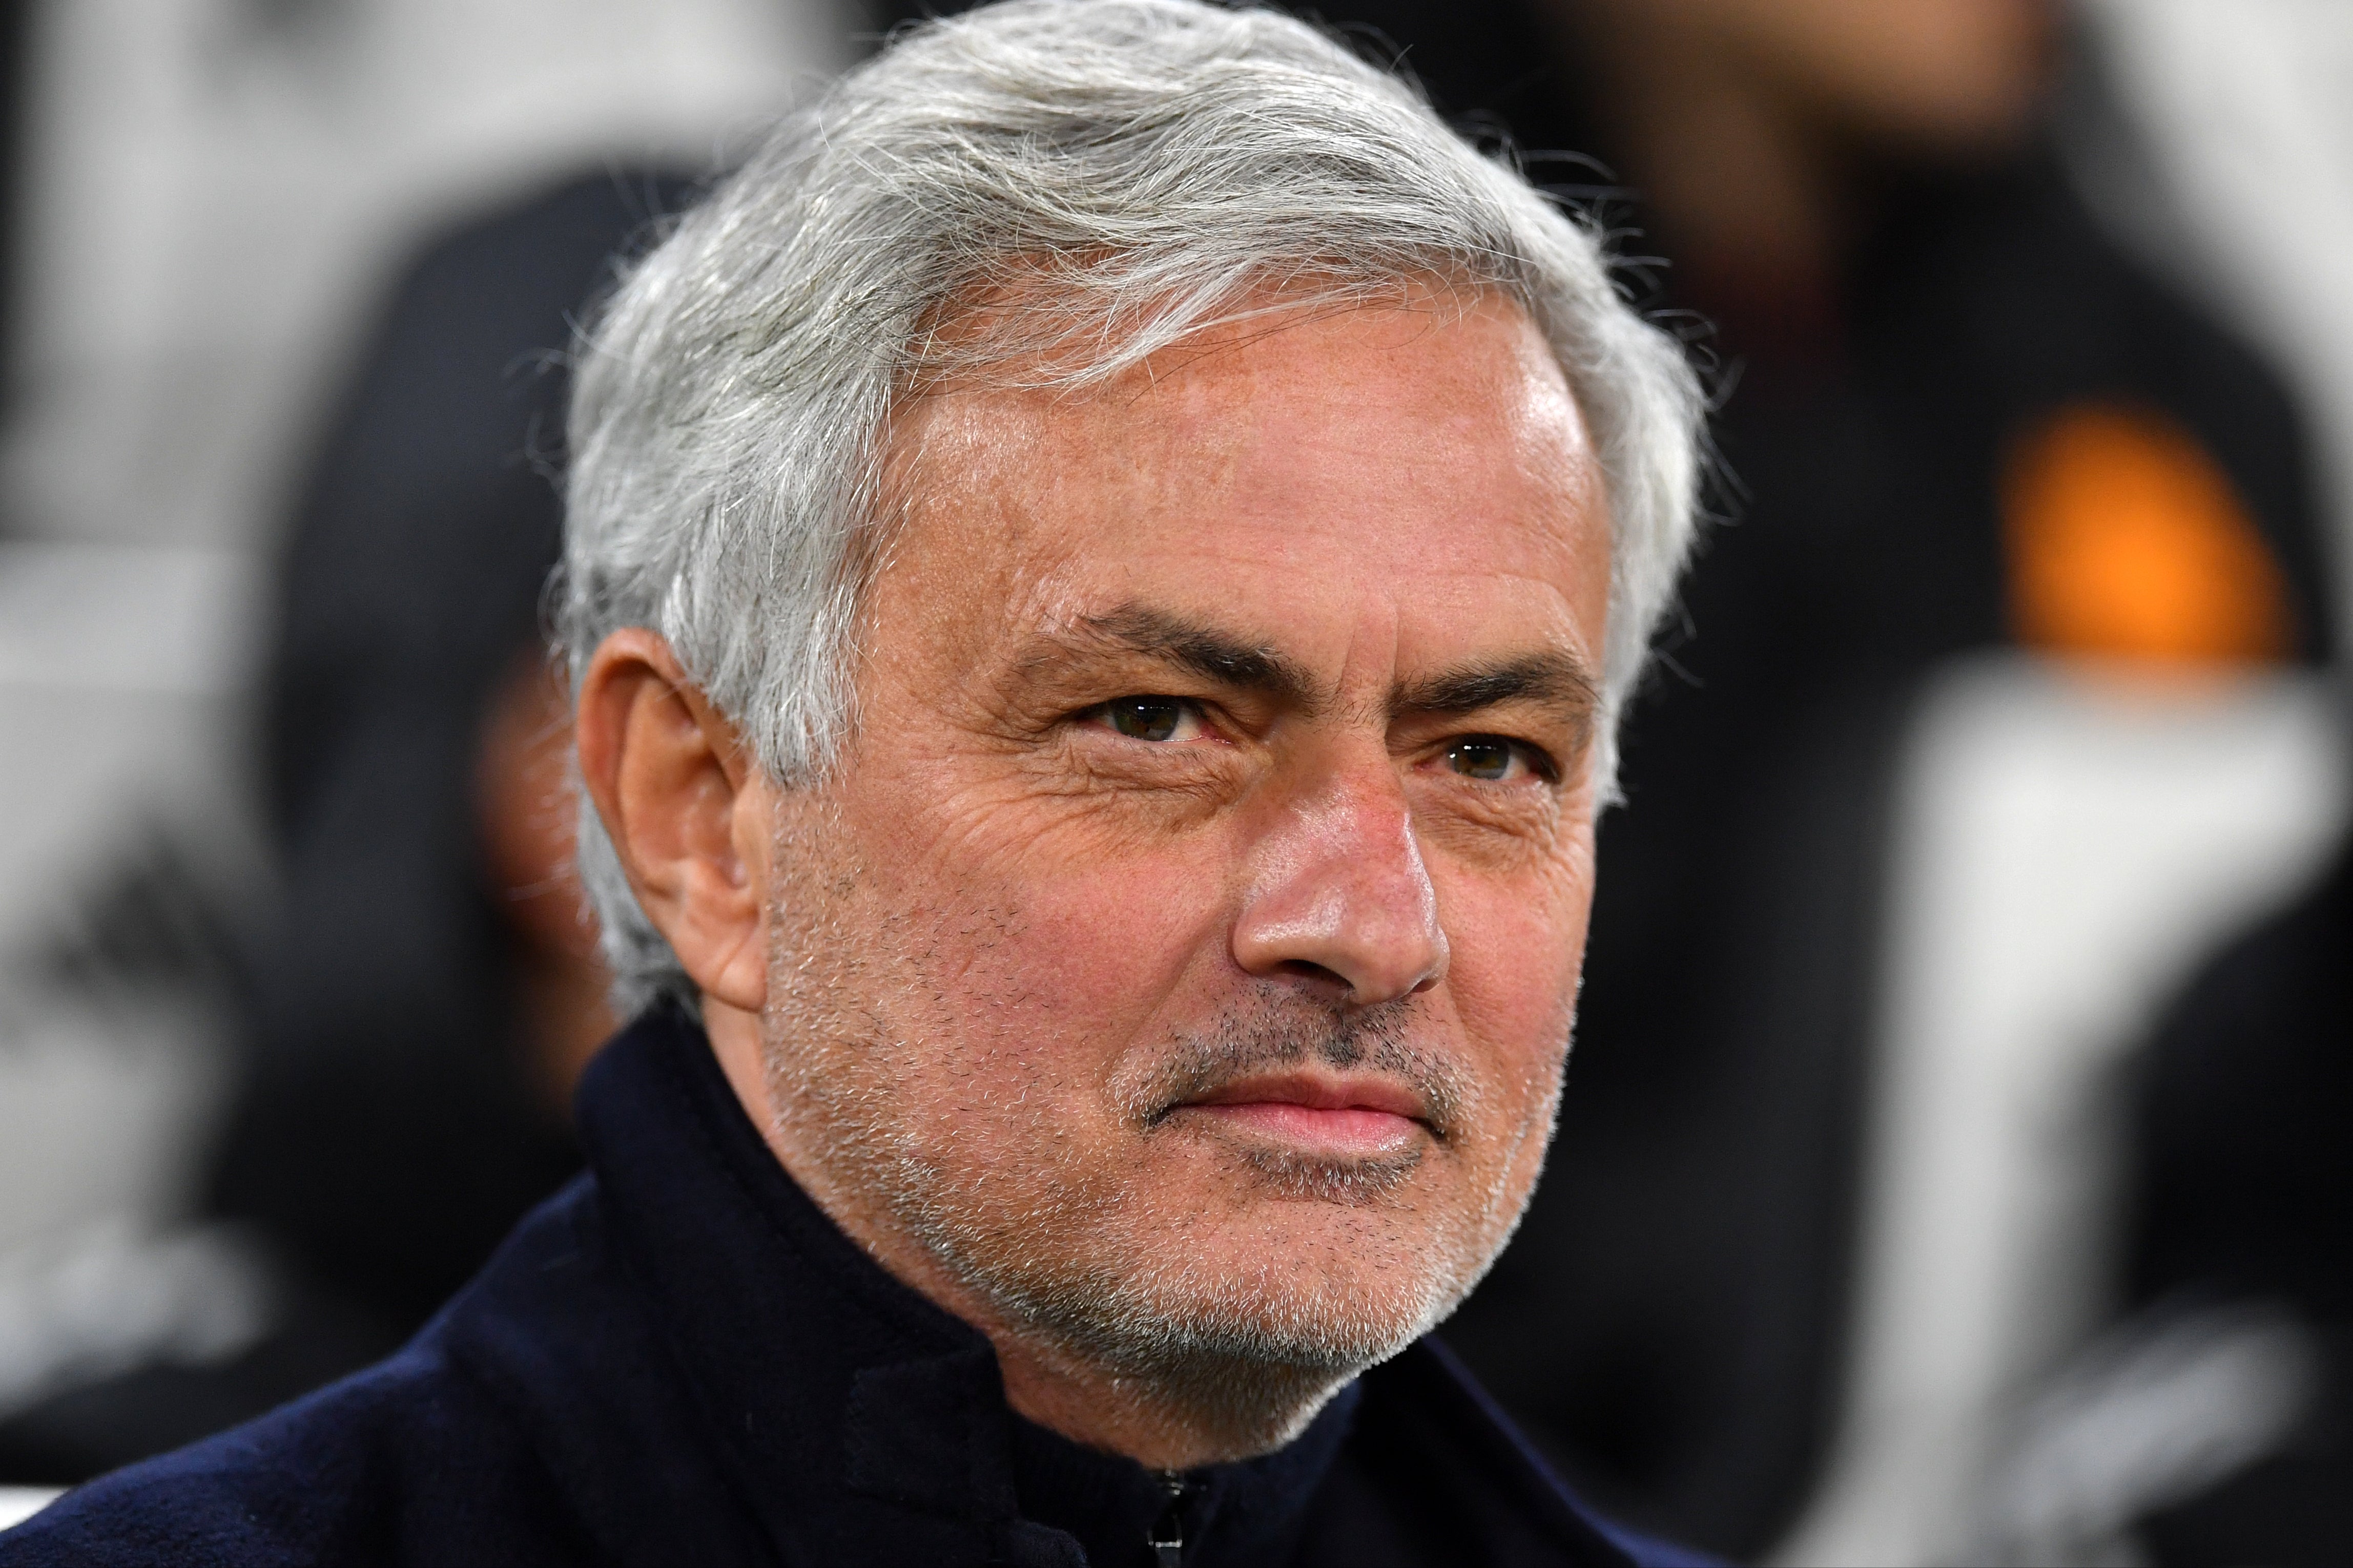 Jose Mourinho turned down the chance to manage England